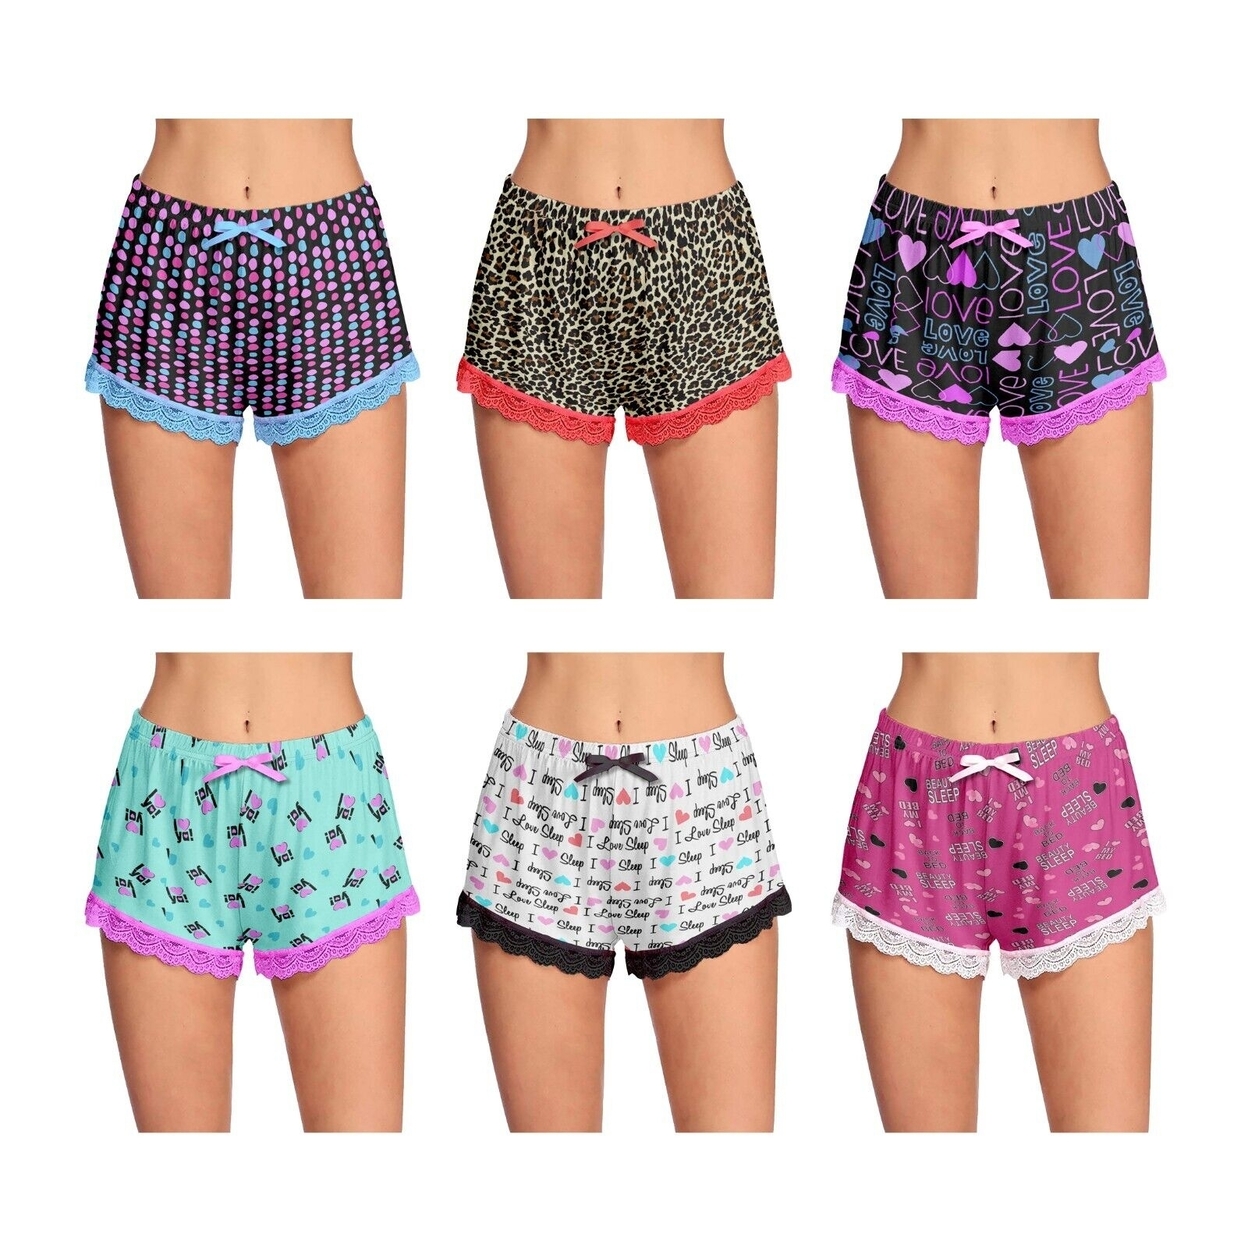 5-Pack: Women's Ultra-Soft Cozy Fun Printed Lace Trim Pajama Lounge Shorts - Small, Animal